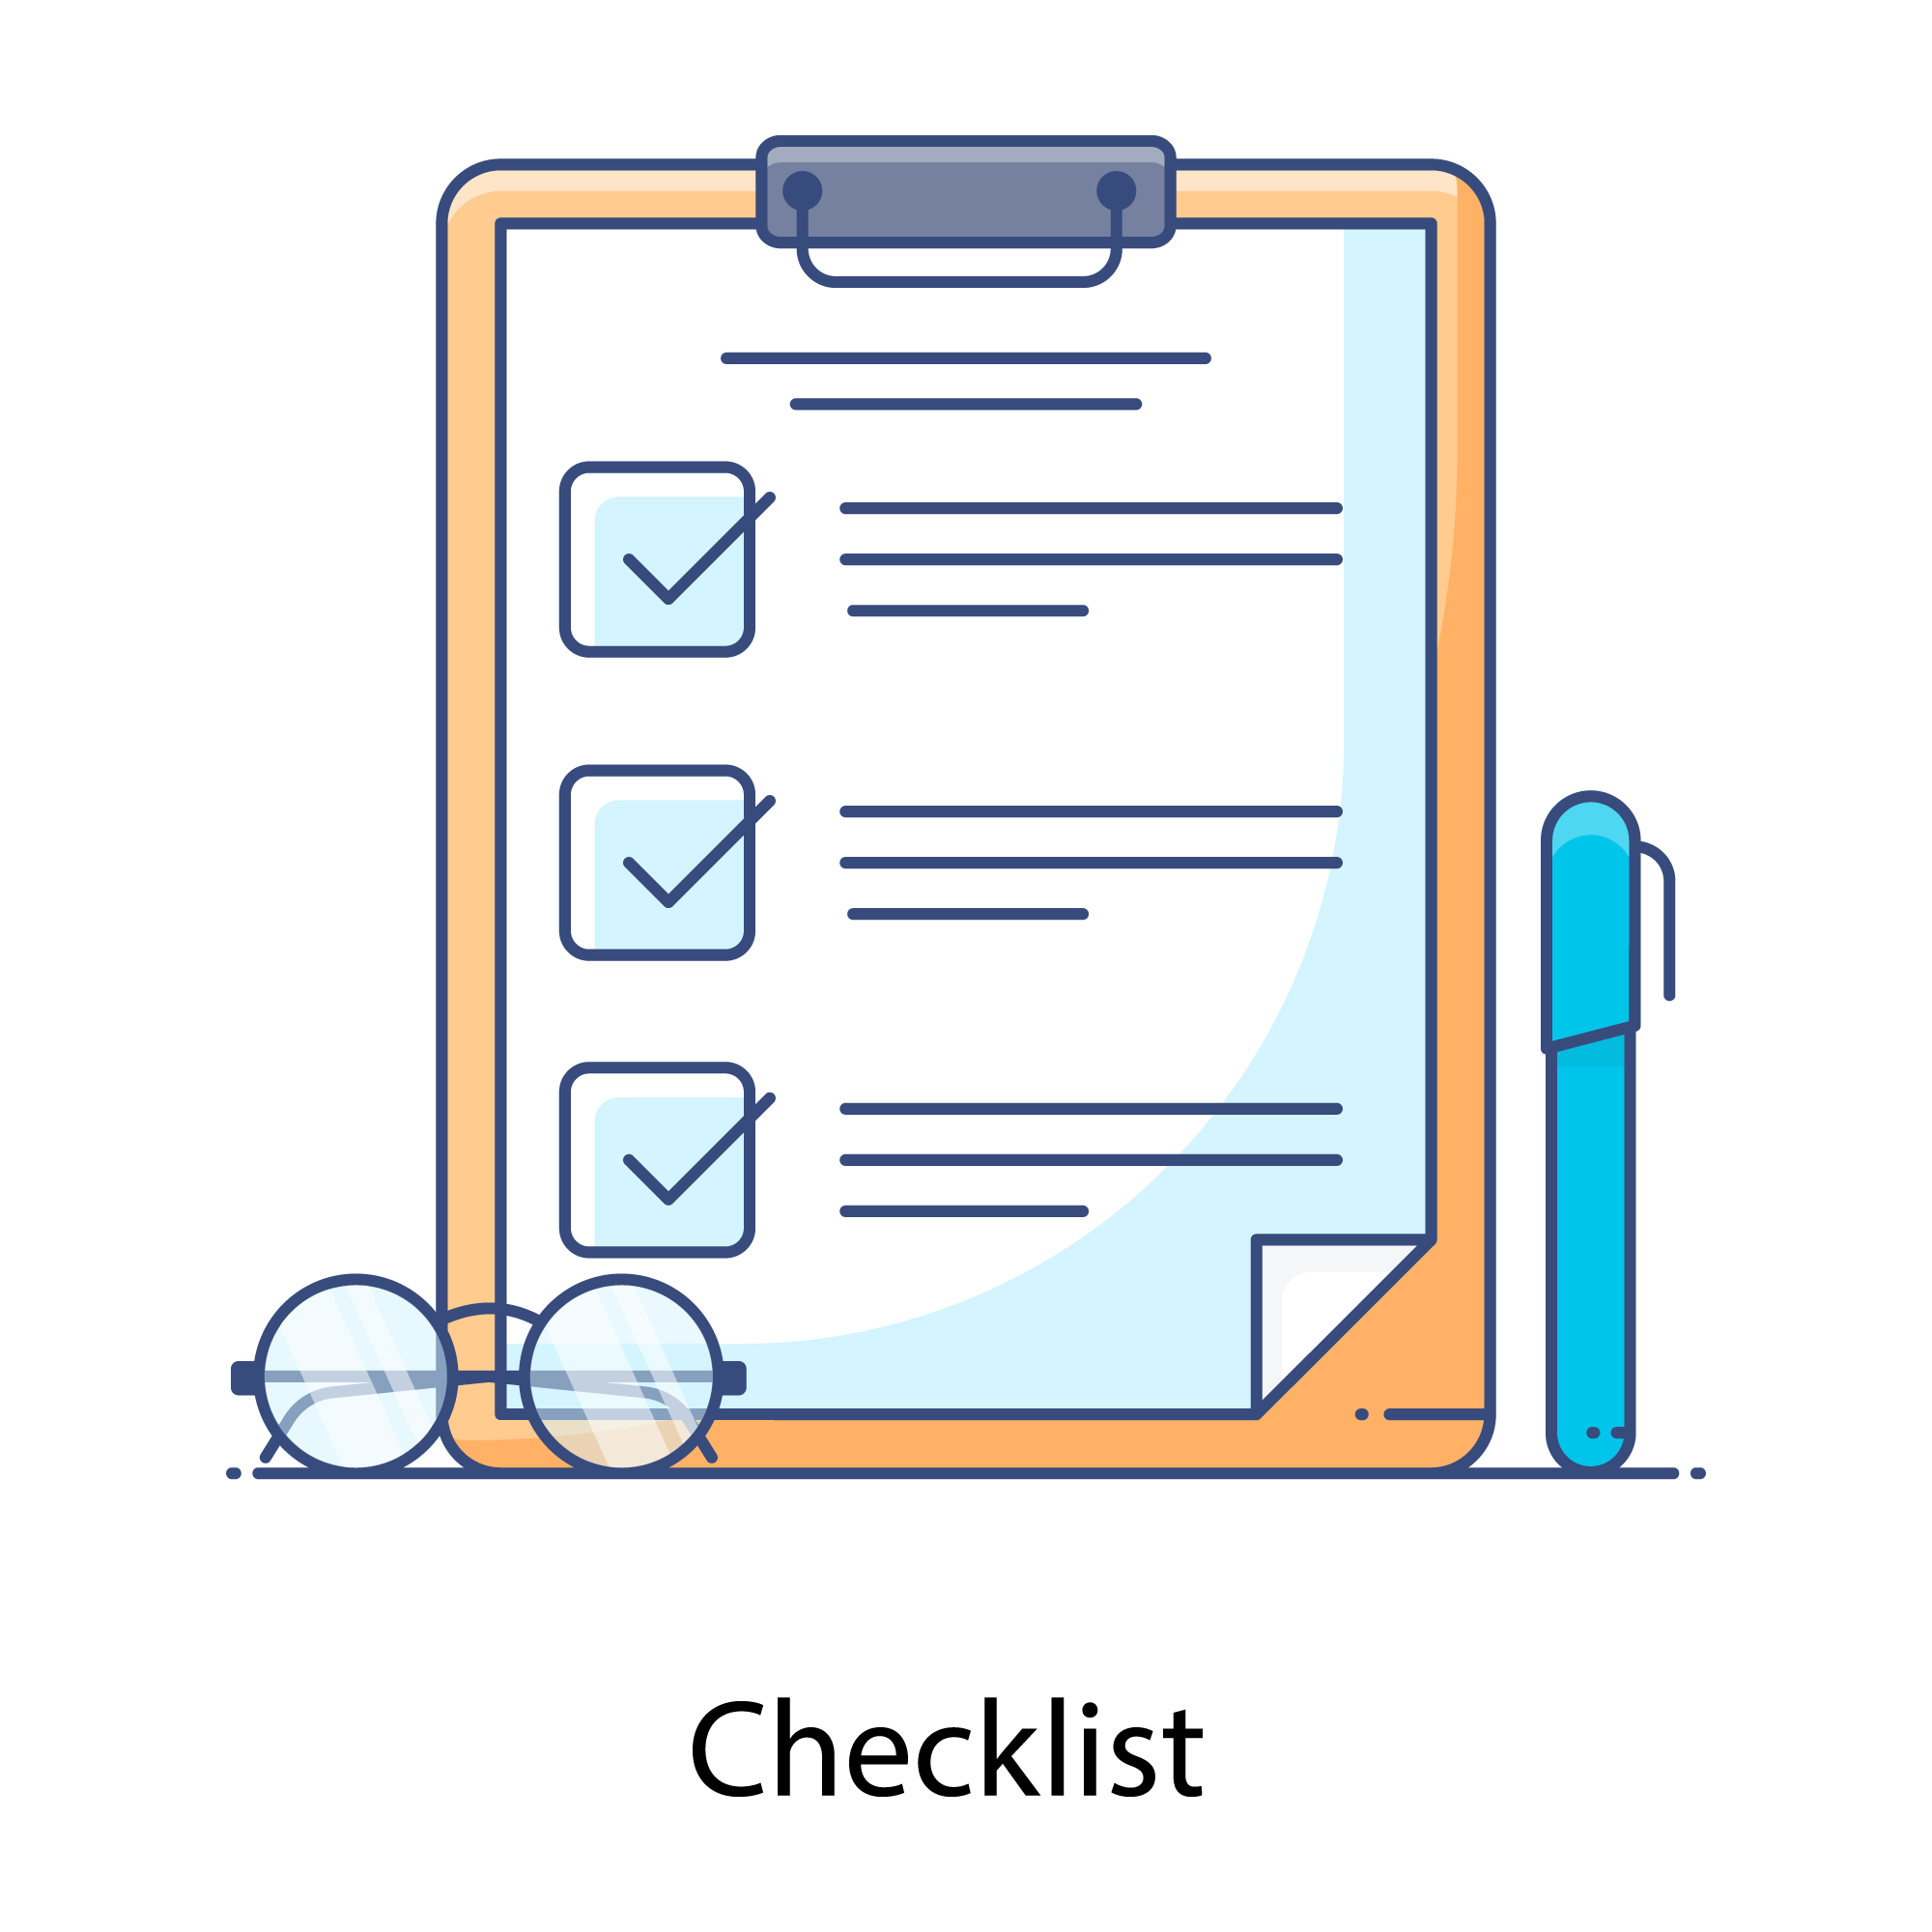 Lovepik_com-450094989-Checklist flat outline icon do list.png